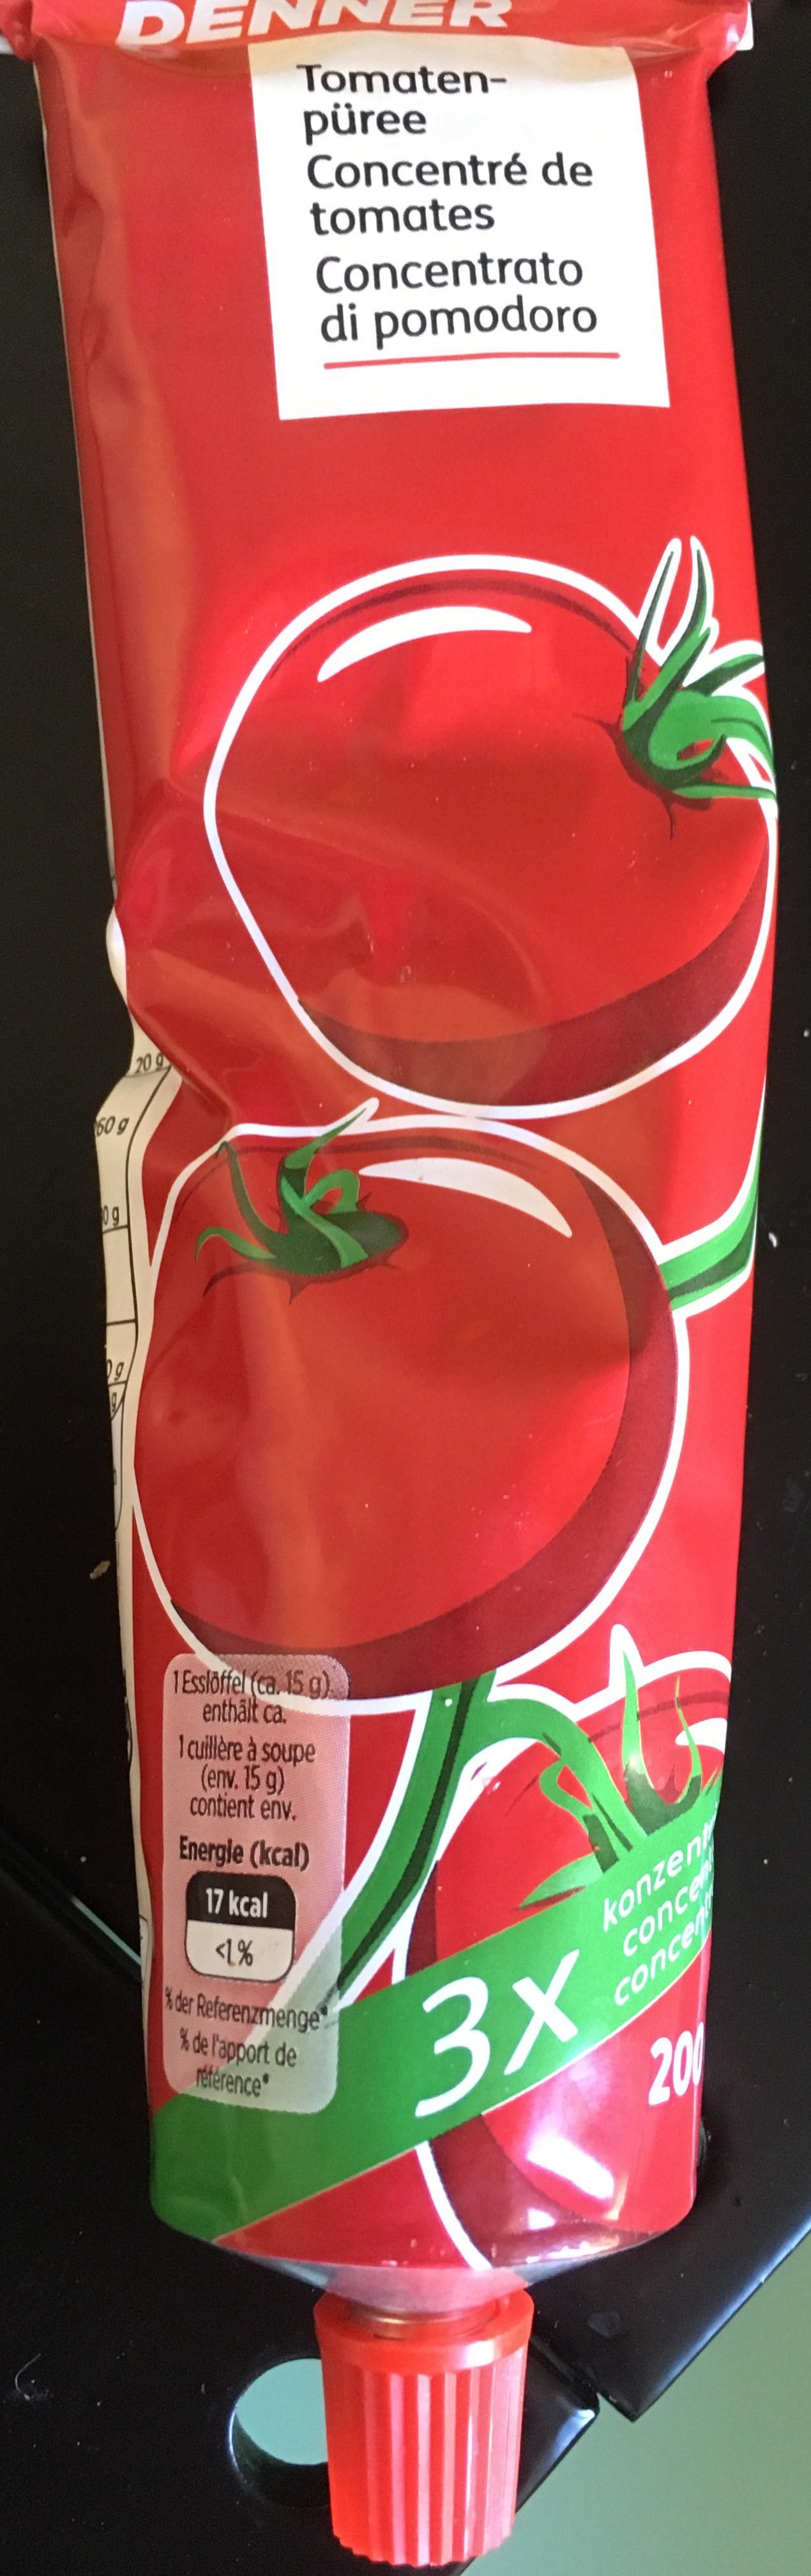 Tomatenpüree - Product - de